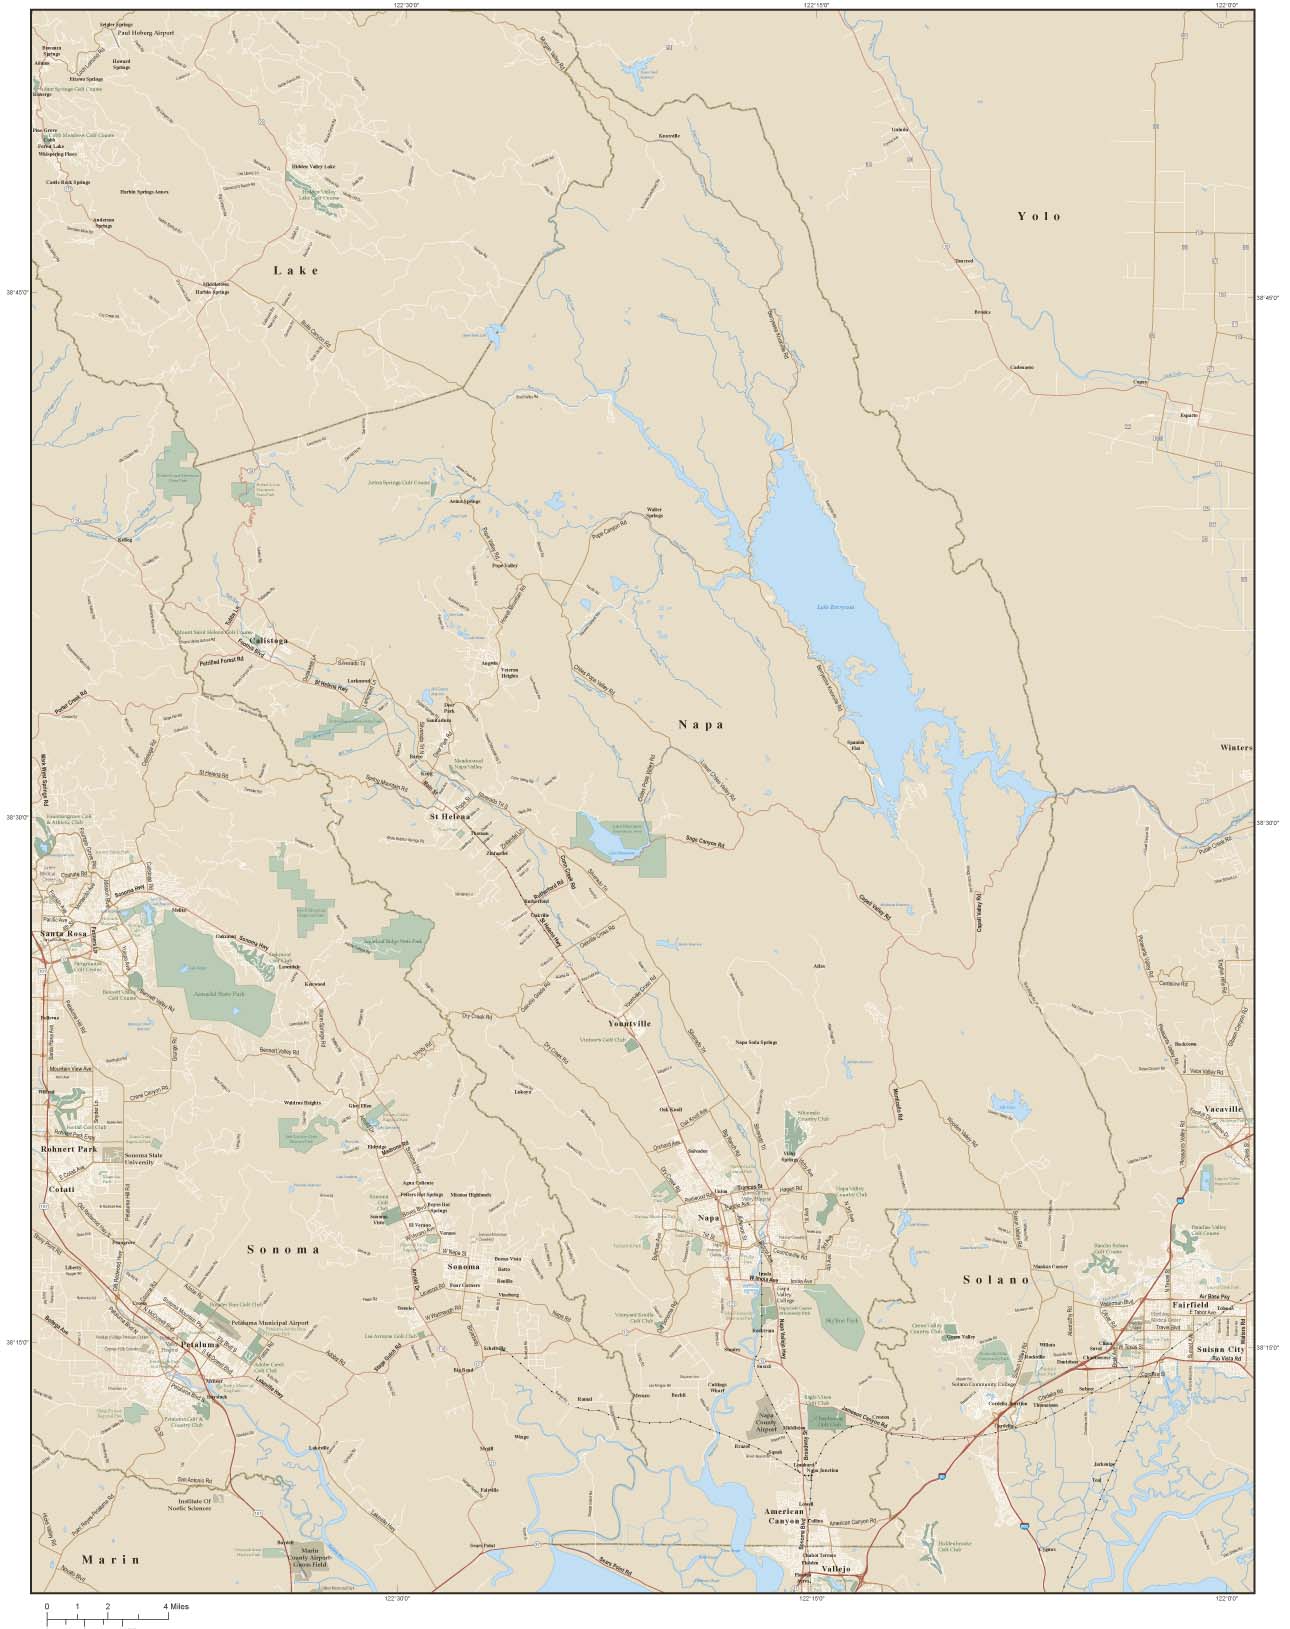 napa county parcel map